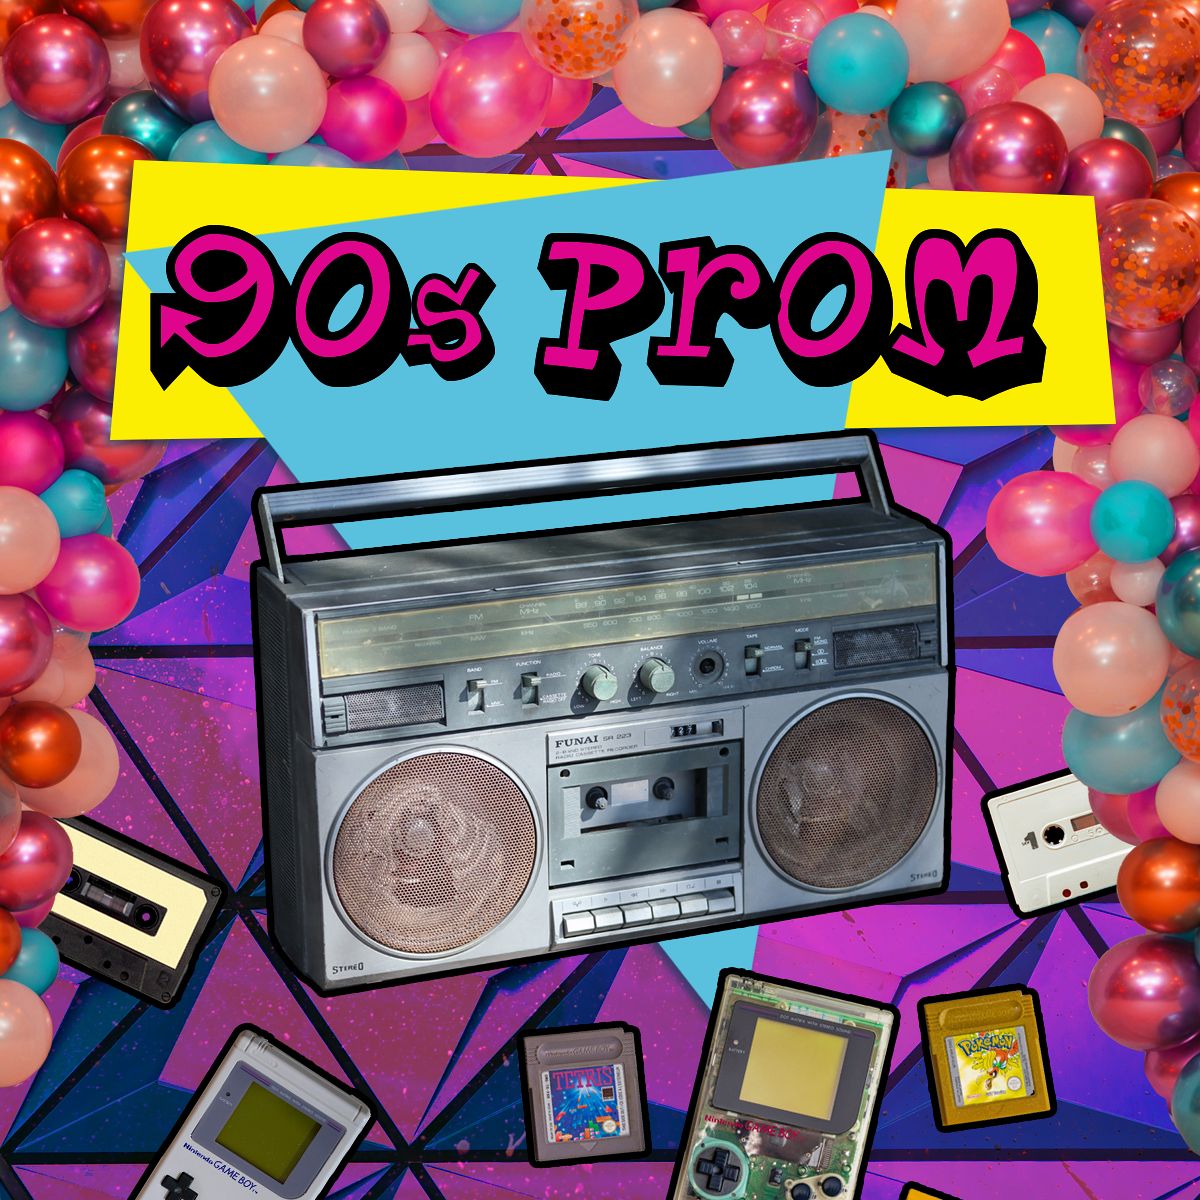 '90s Prom